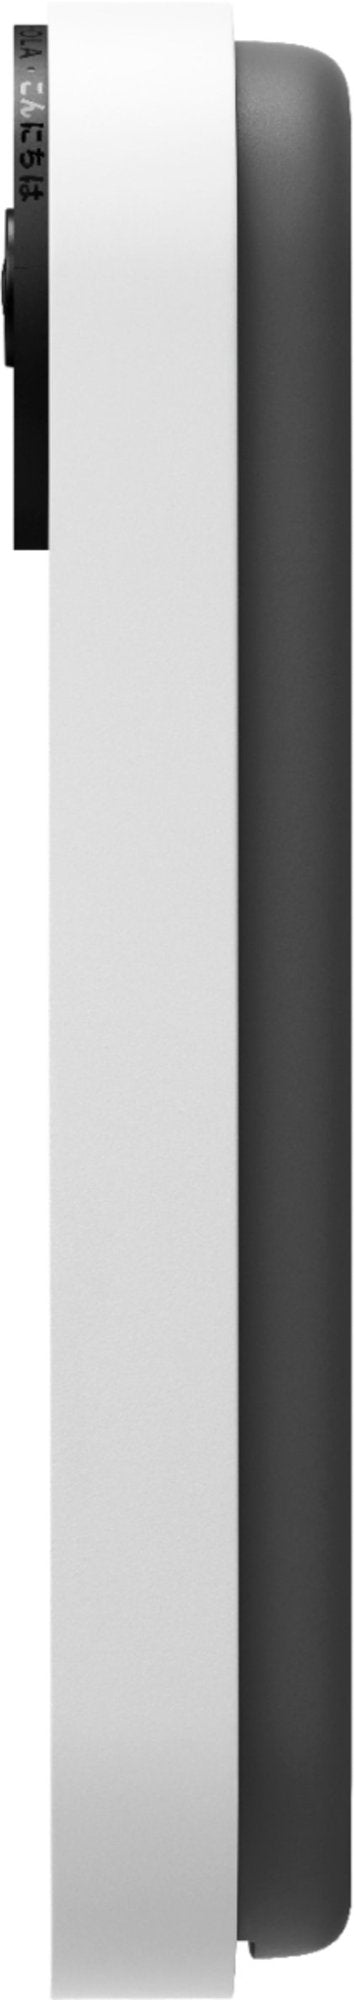 Google - GA01318-US Nest Doorbell Battery - Snow